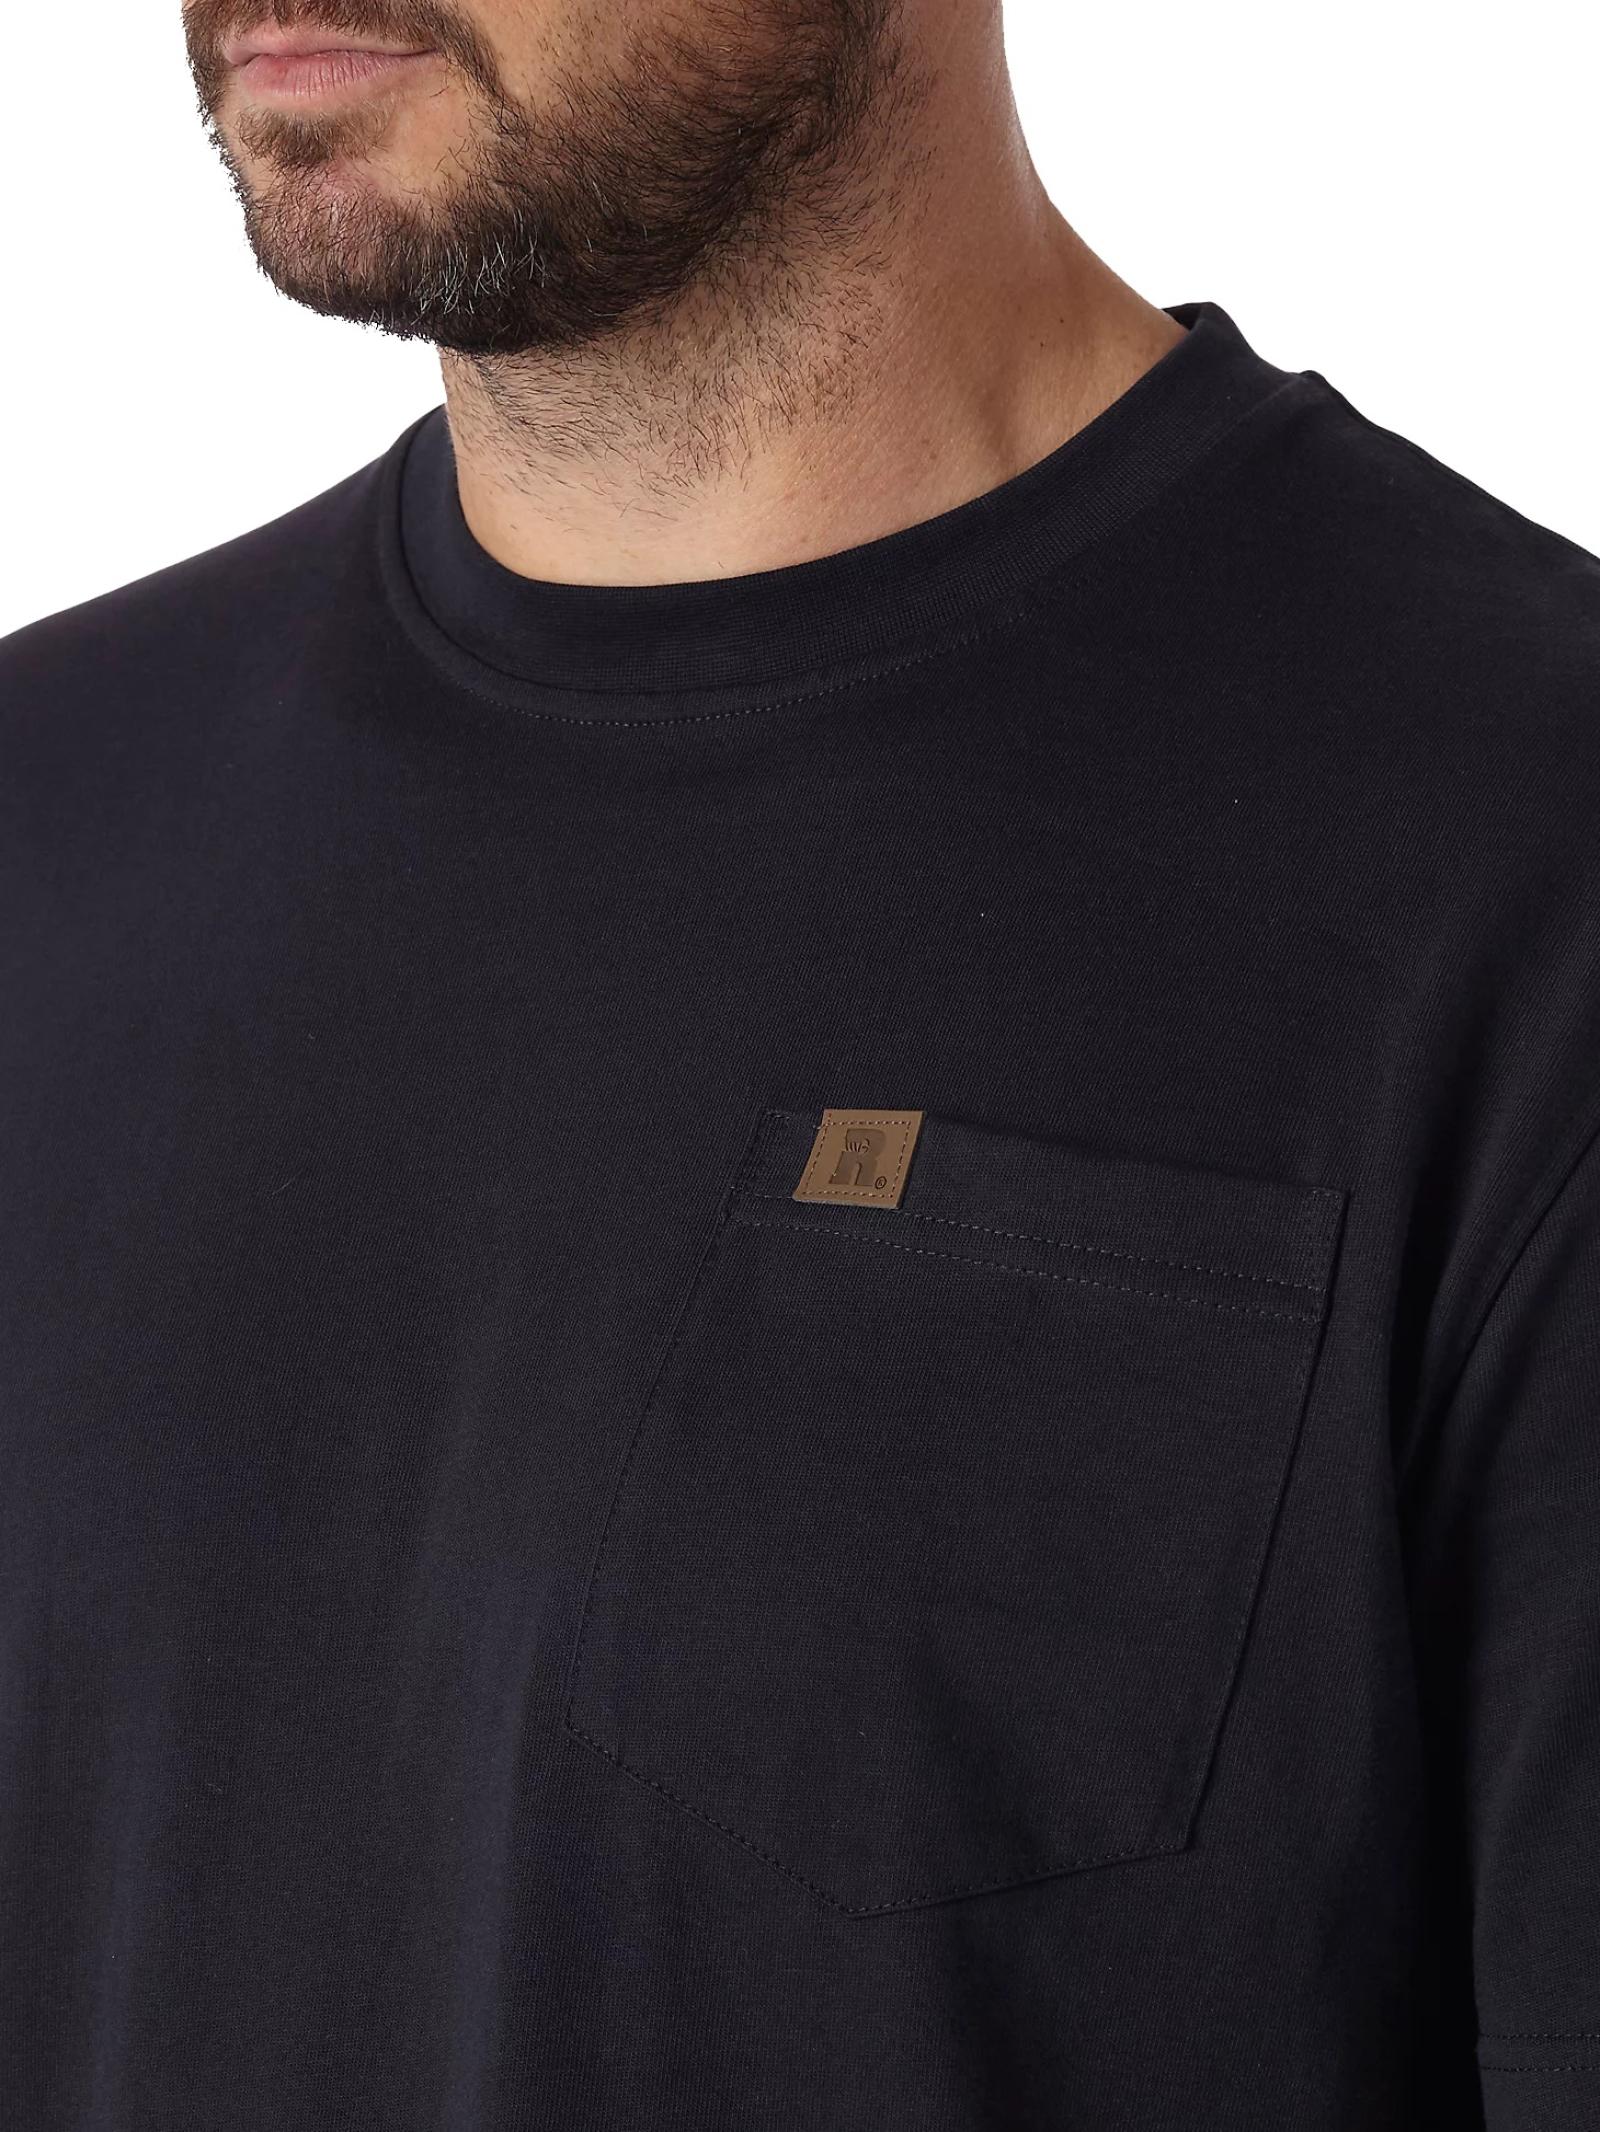 Wrangler Men's Riggs Workwear Short Sleeve Pocket T-Shirt